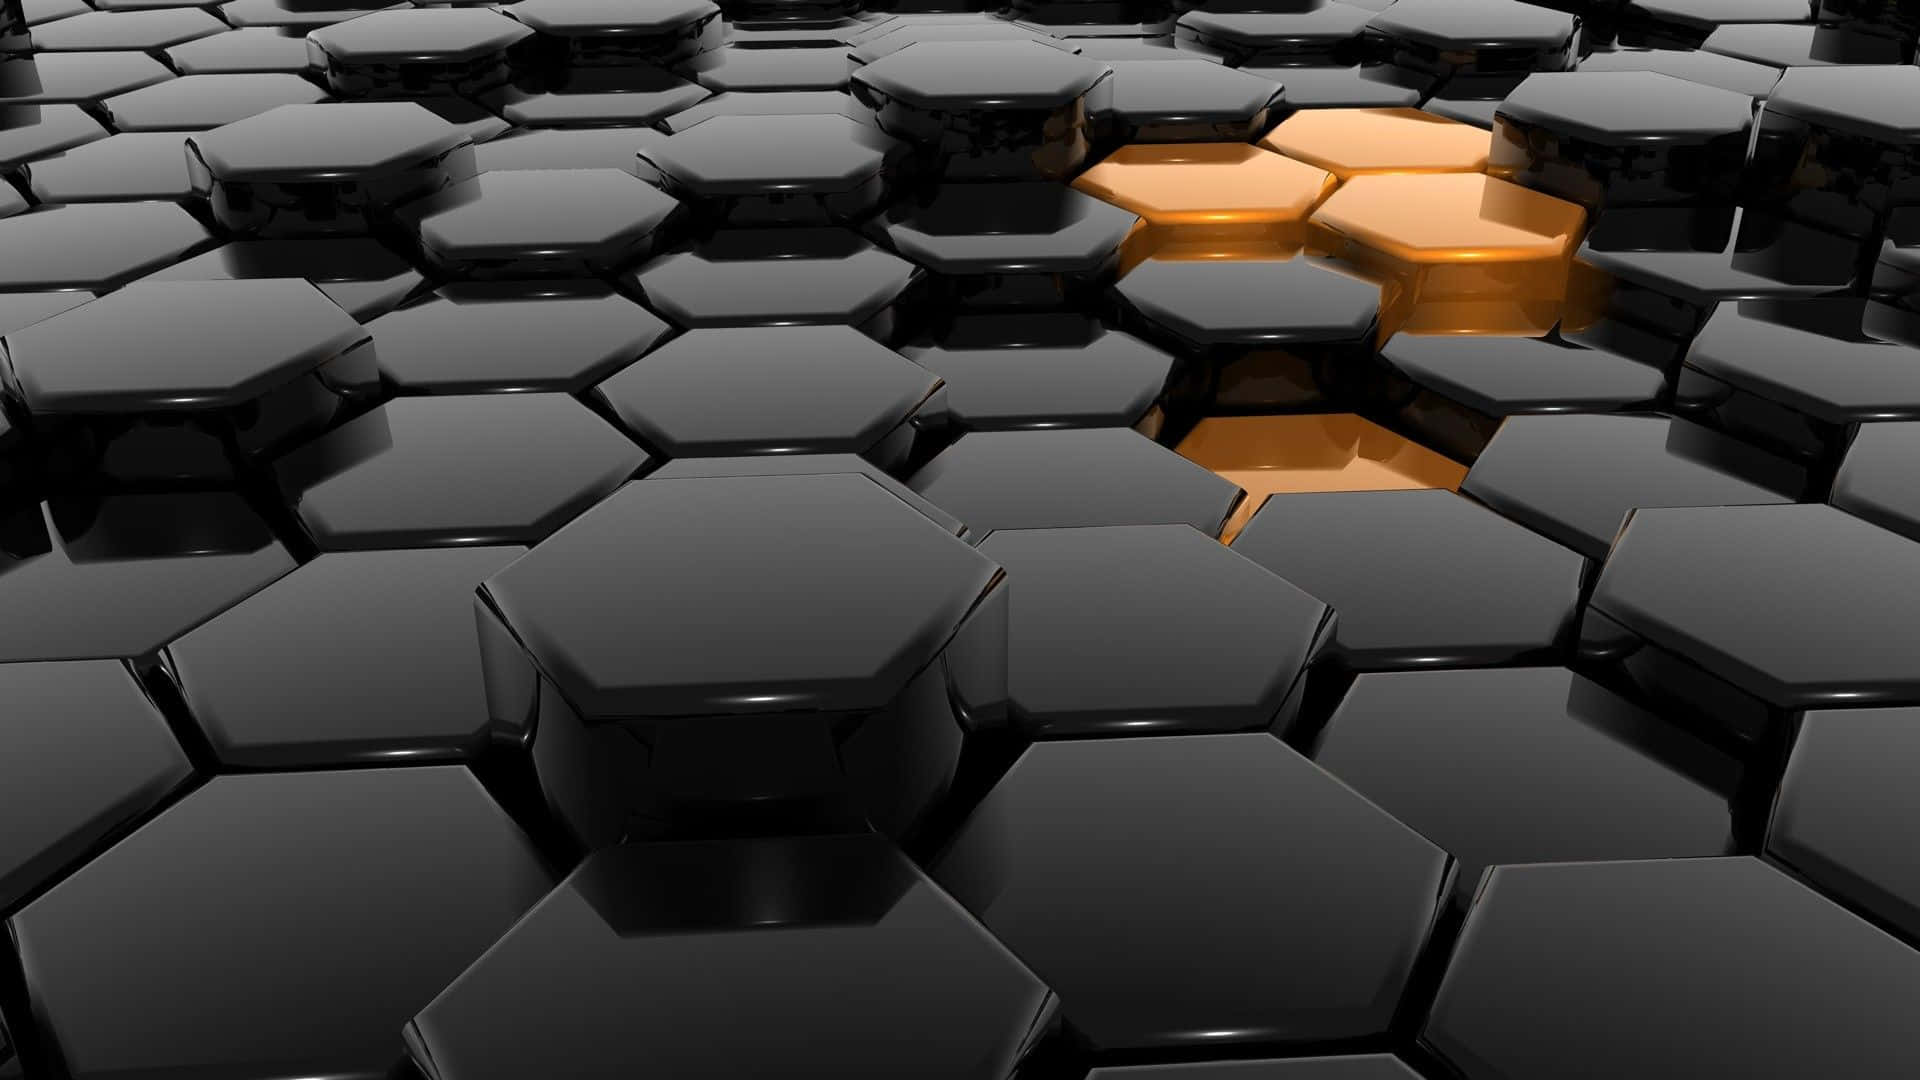 A Black Hexagonal Background With An Orange Circle